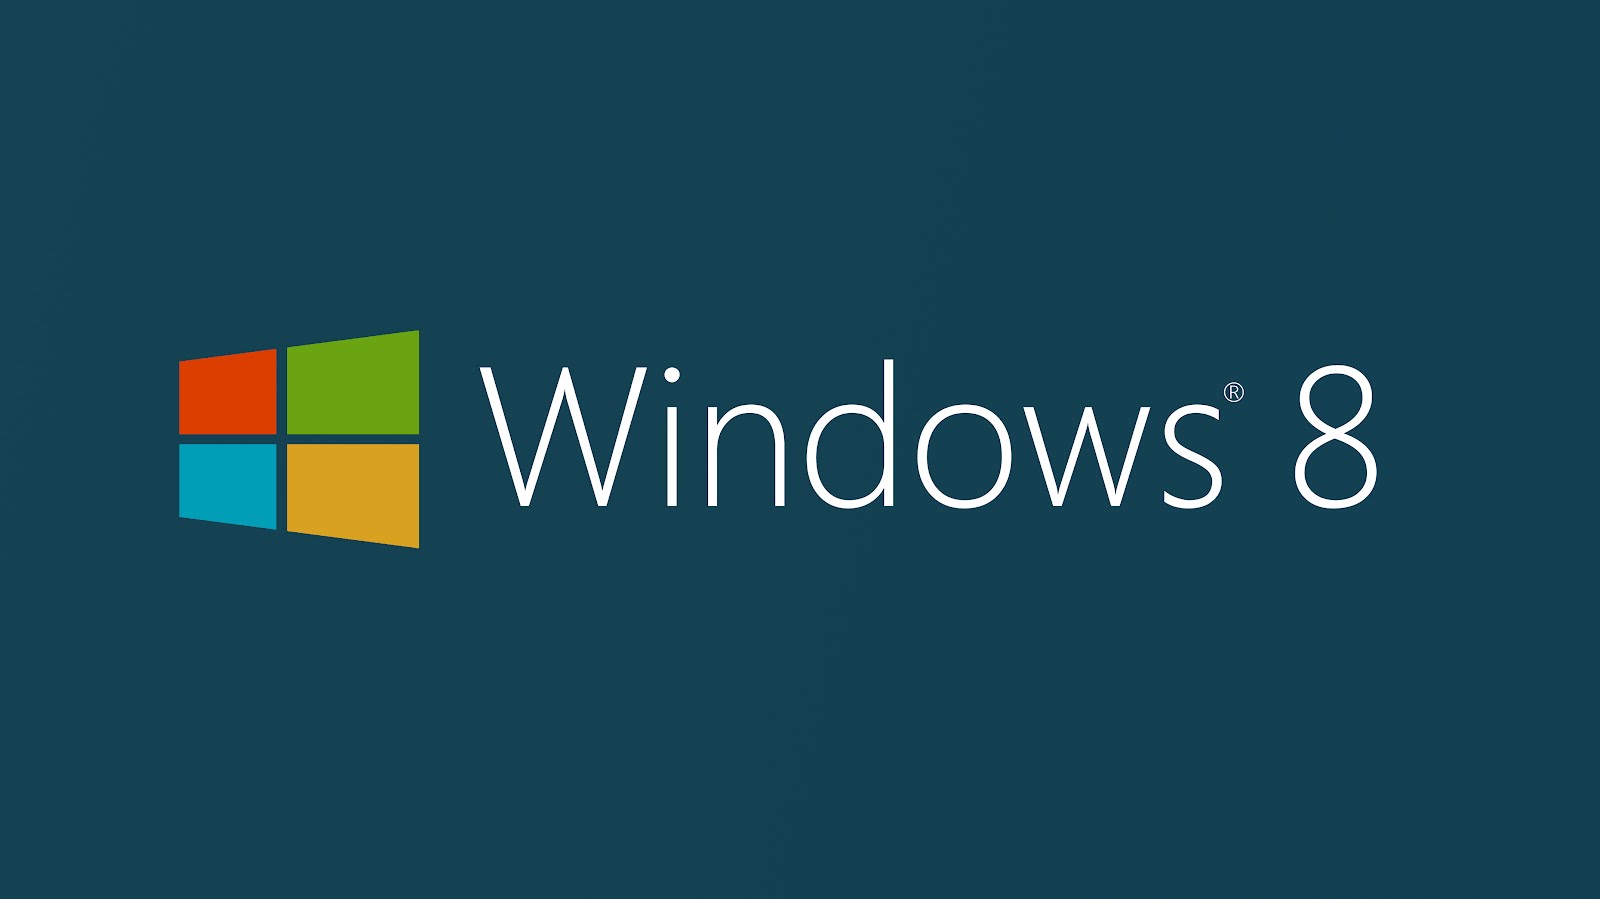 Windows mr. ОС виндовс 8. Операционная система Windows 8. Виндовс 8.1. Виндовс 8 система.